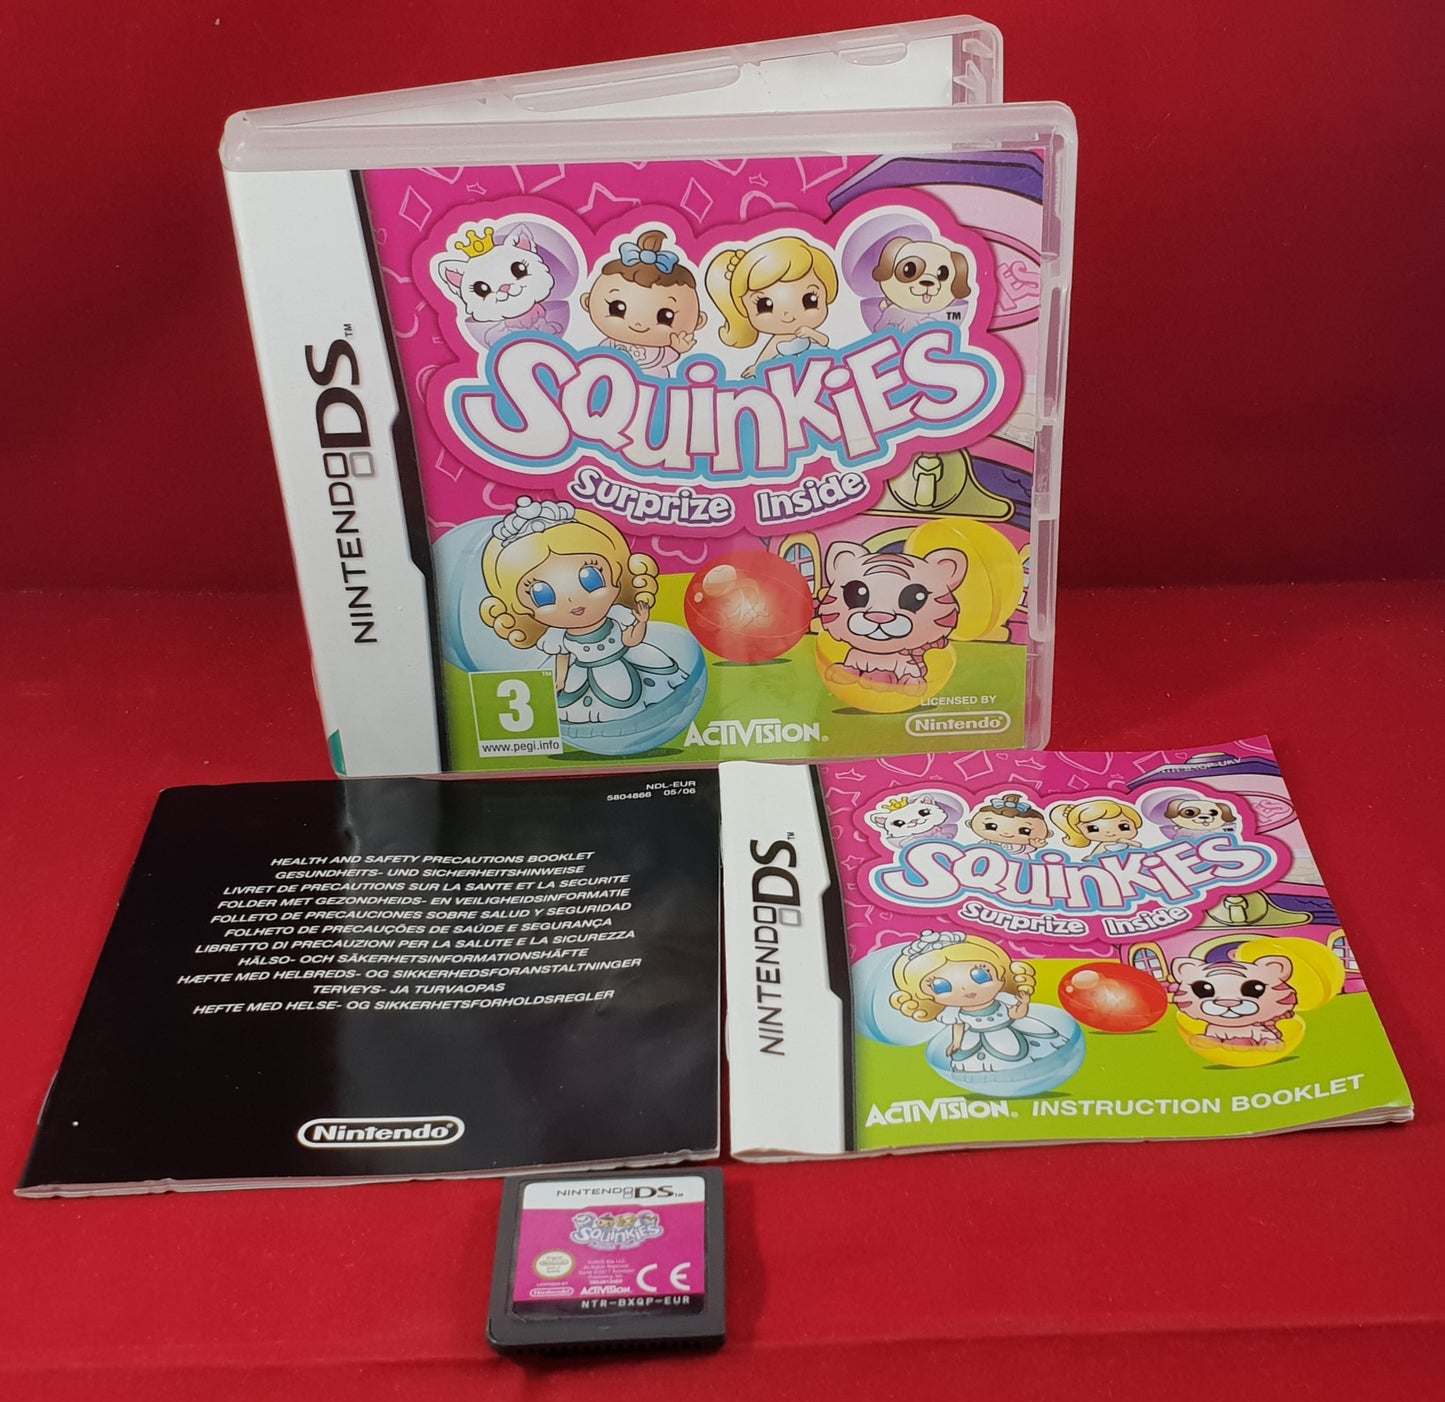 Squinkies Surprise Inside Nintendo DS Game